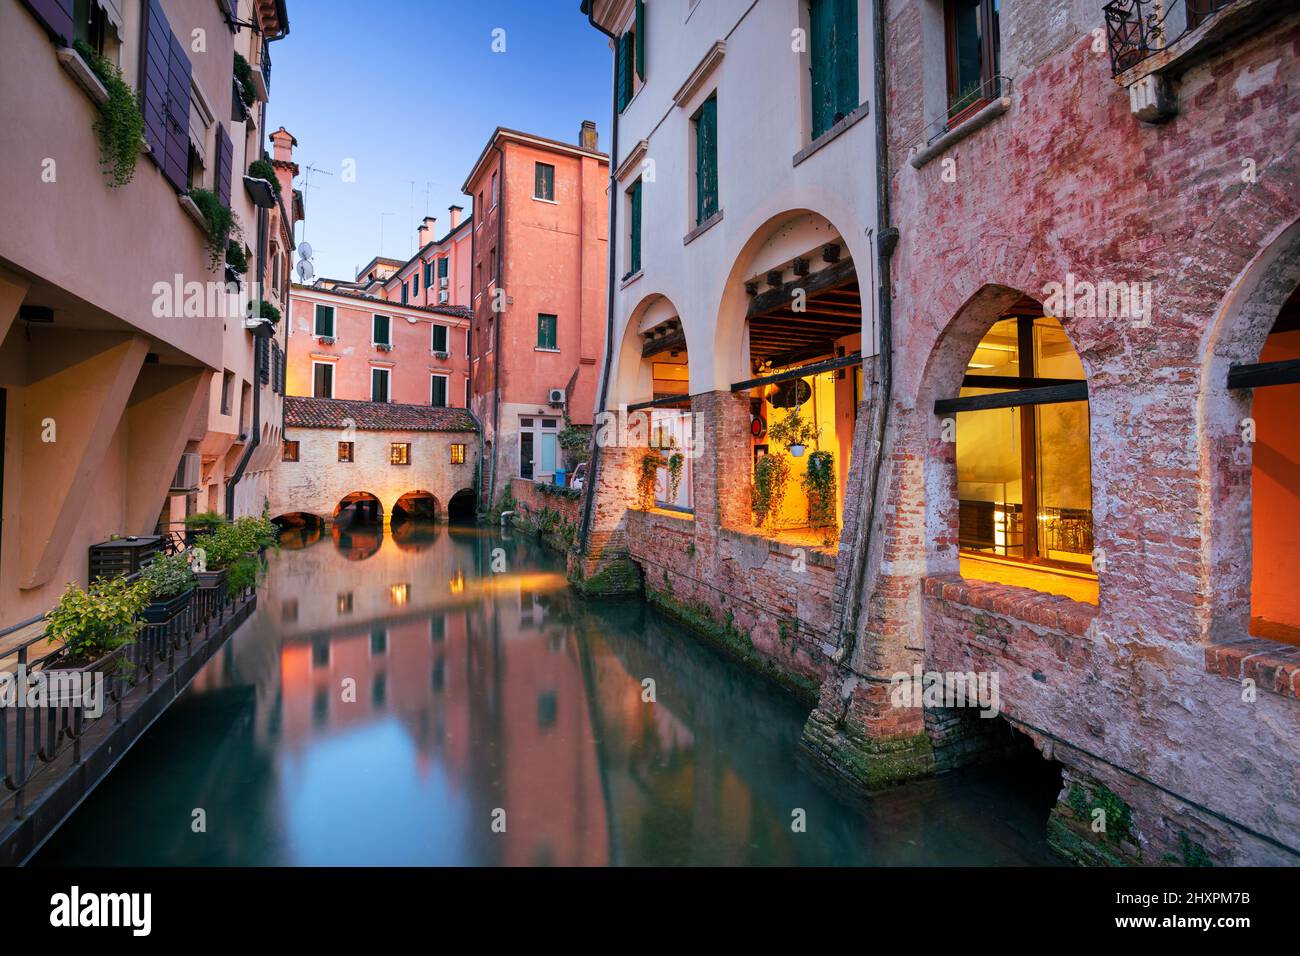 Treviso, Italia. Imagen del paisaje urbano del centro histórico de Treviso, Italia al atardecer. Foto de stock